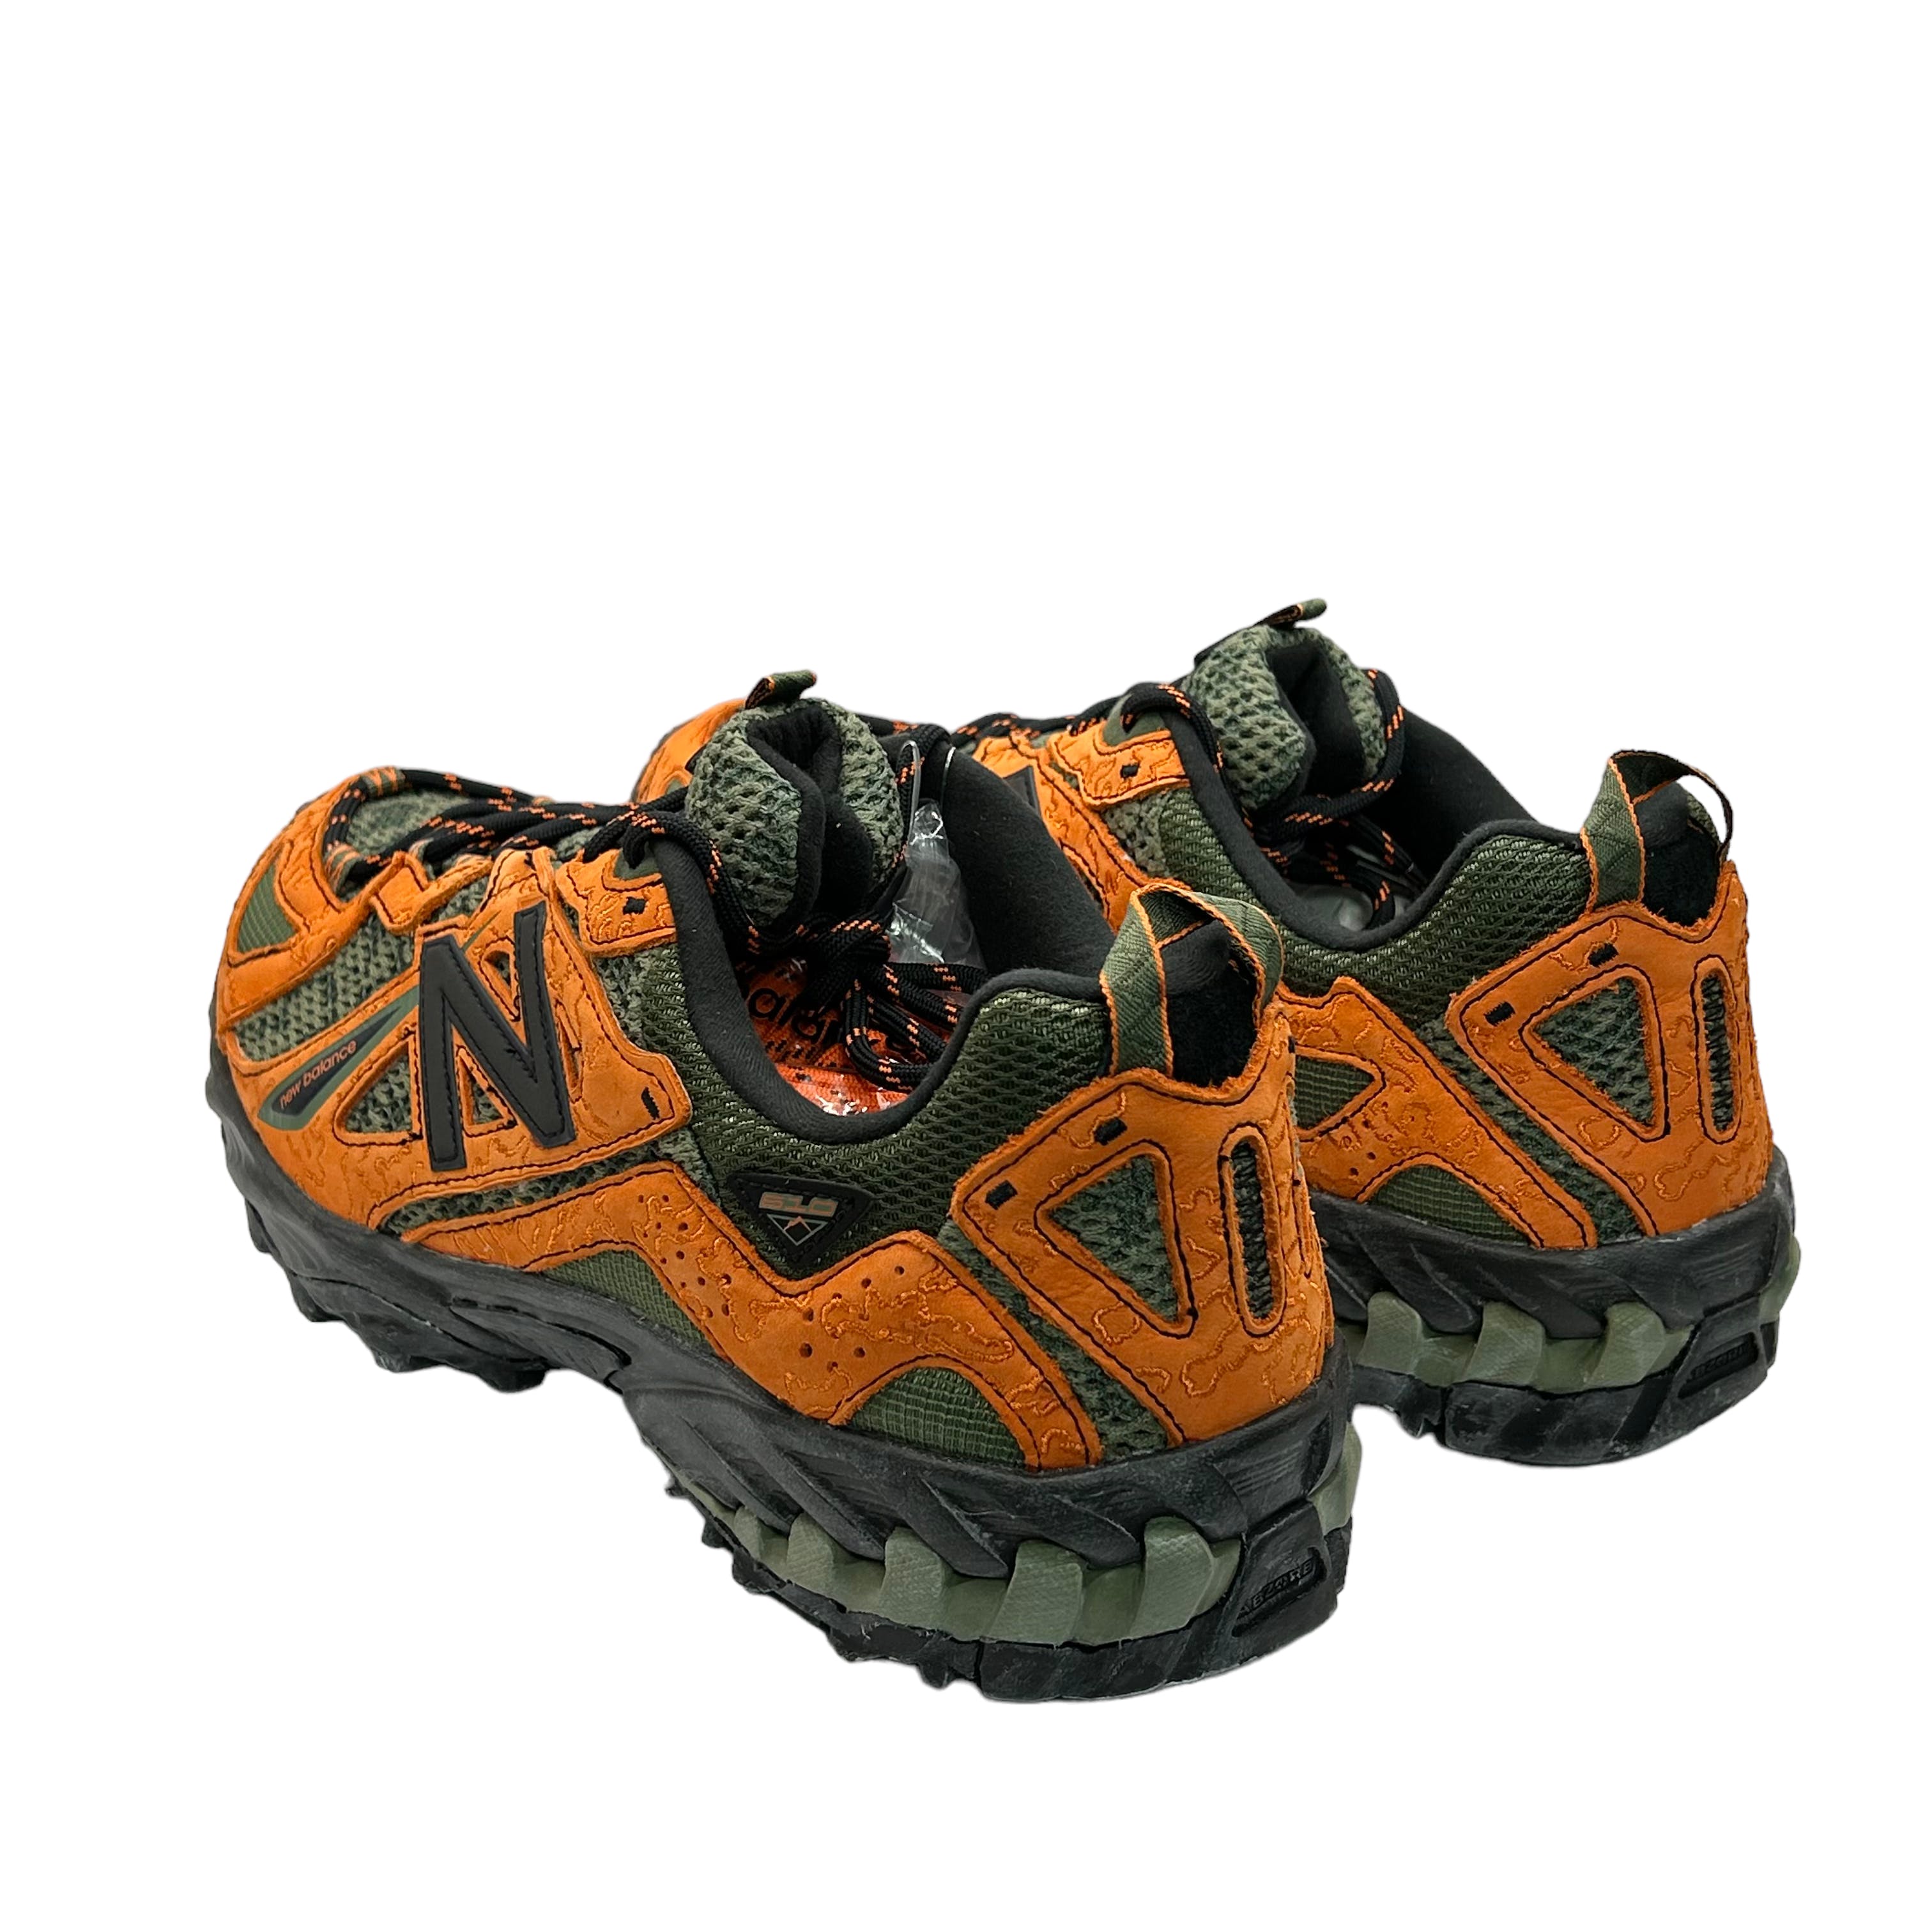 JFG x NB 610 “Lil Swamps” Hiking Shoe - 4